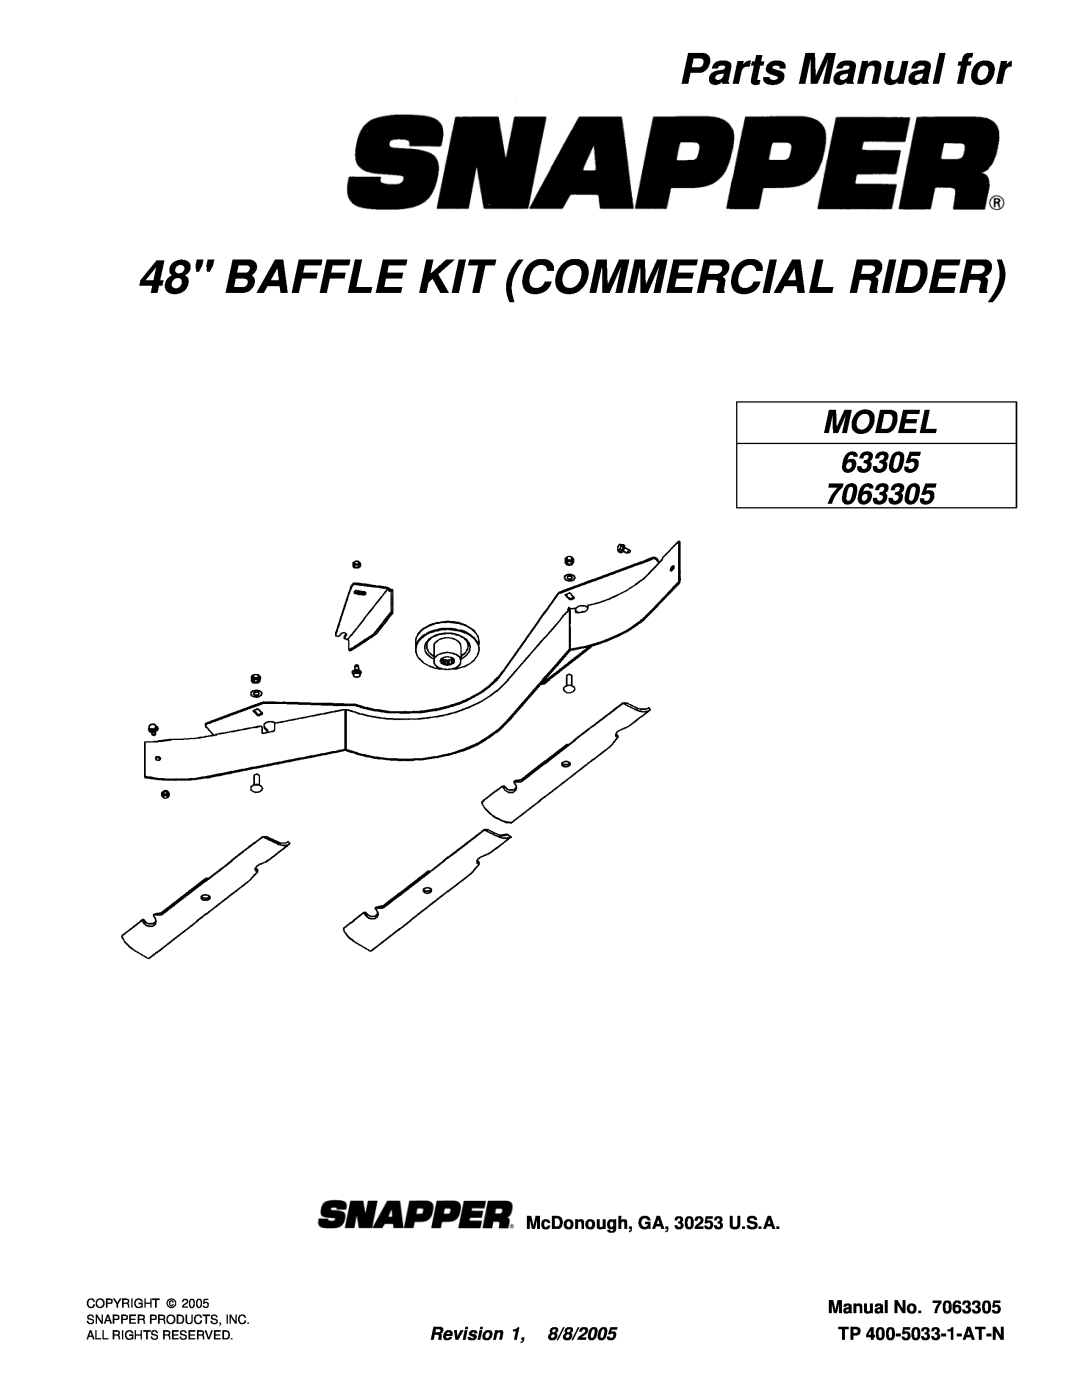 Snapper 63305 manual Parts Manual for, McDonough, GA, 30253 U.S.A, Revision 1, 8/8/2005, TP 400-5033-1-AT-N, Model 